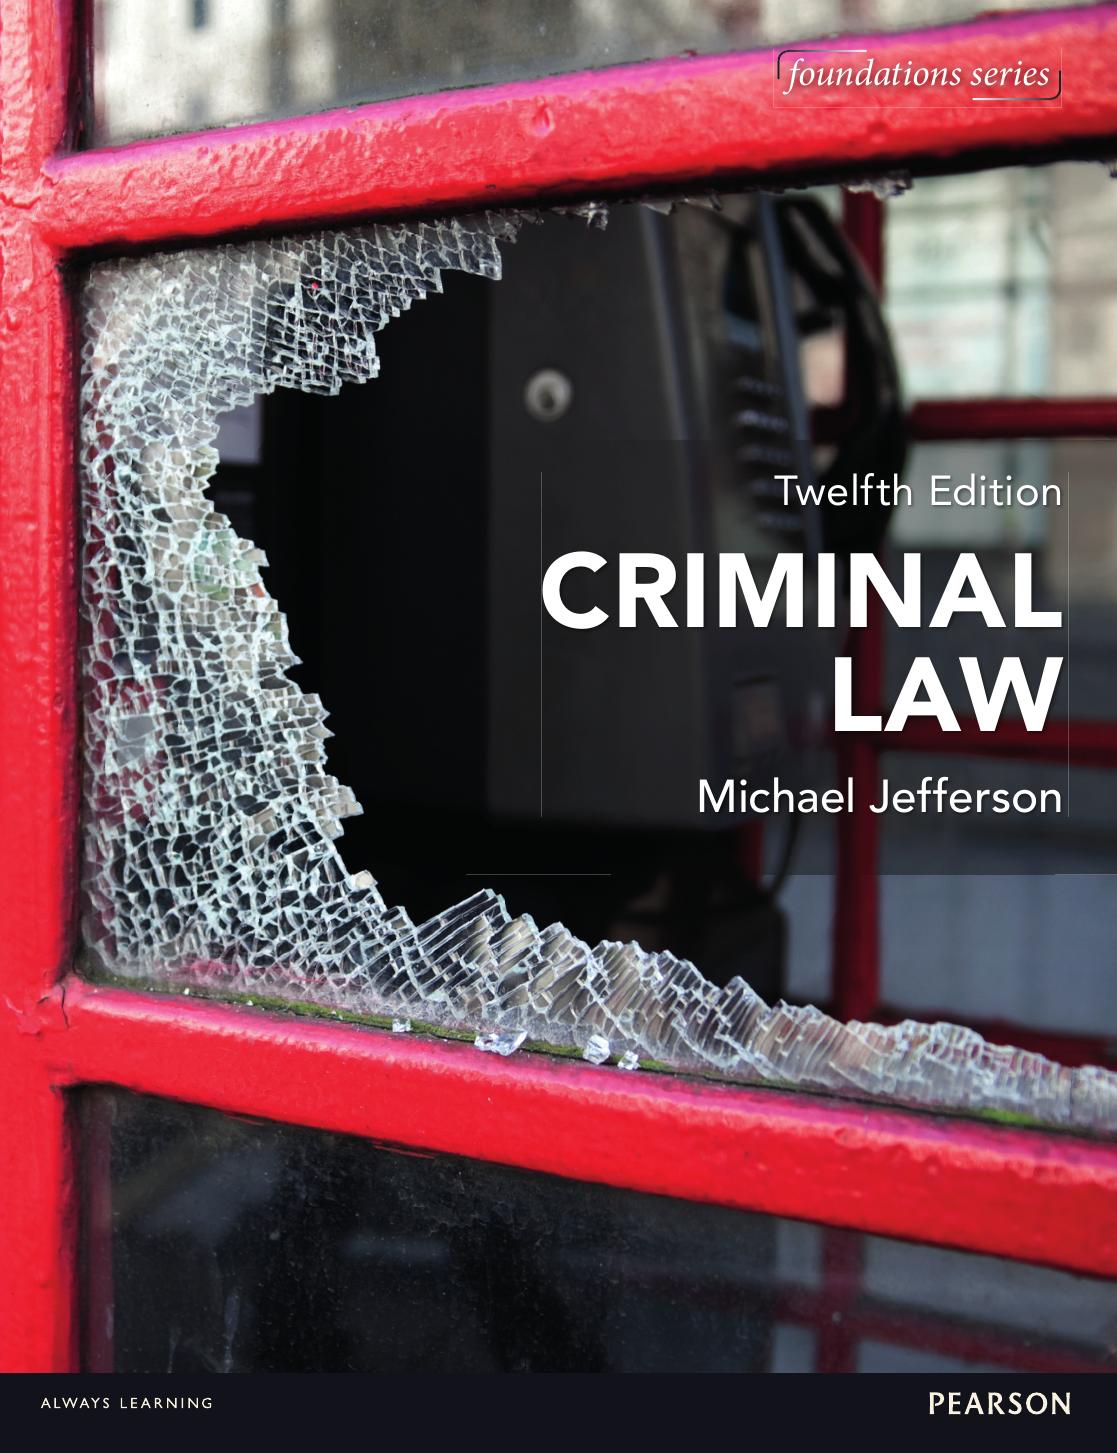 Criminal Law 12th Edition.jpg